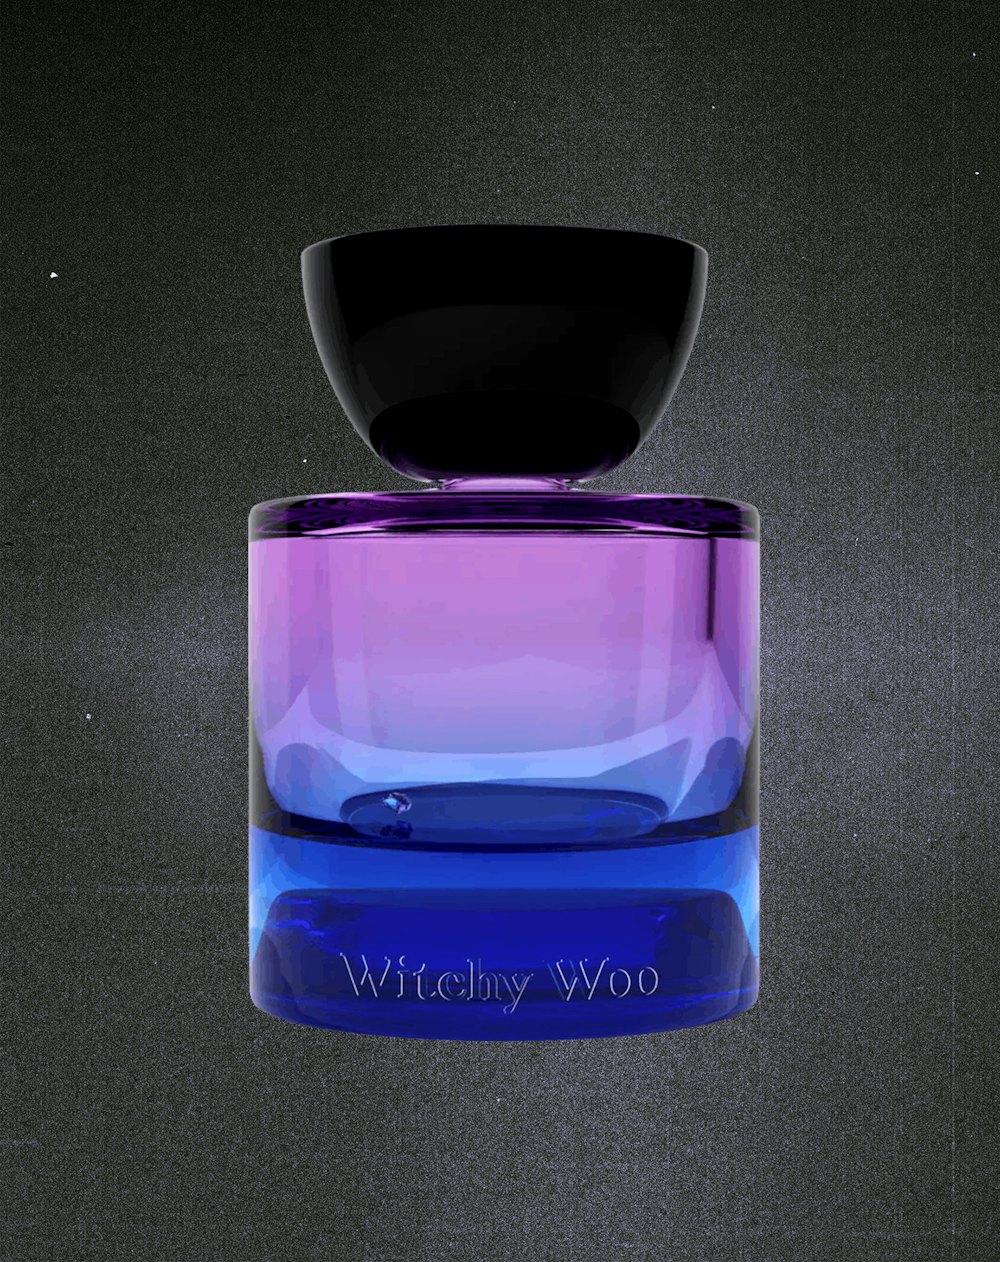 vyrao Witchy Woo Eau de Parfum